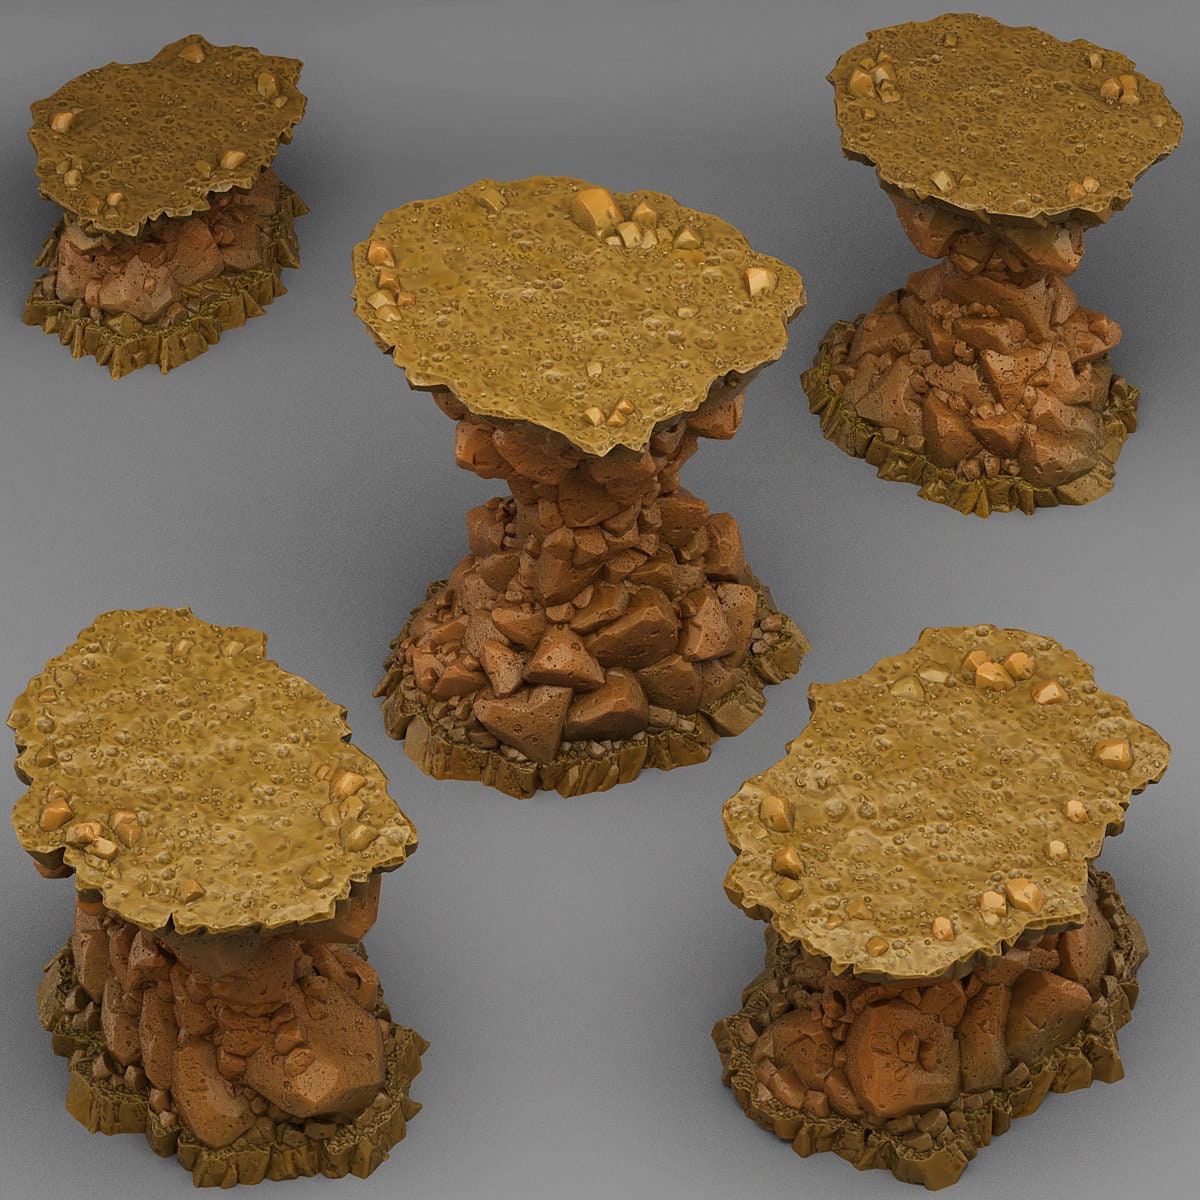 Natural Stone Platform Miniatures | DnD Rock Terrain - Plague Miniatures